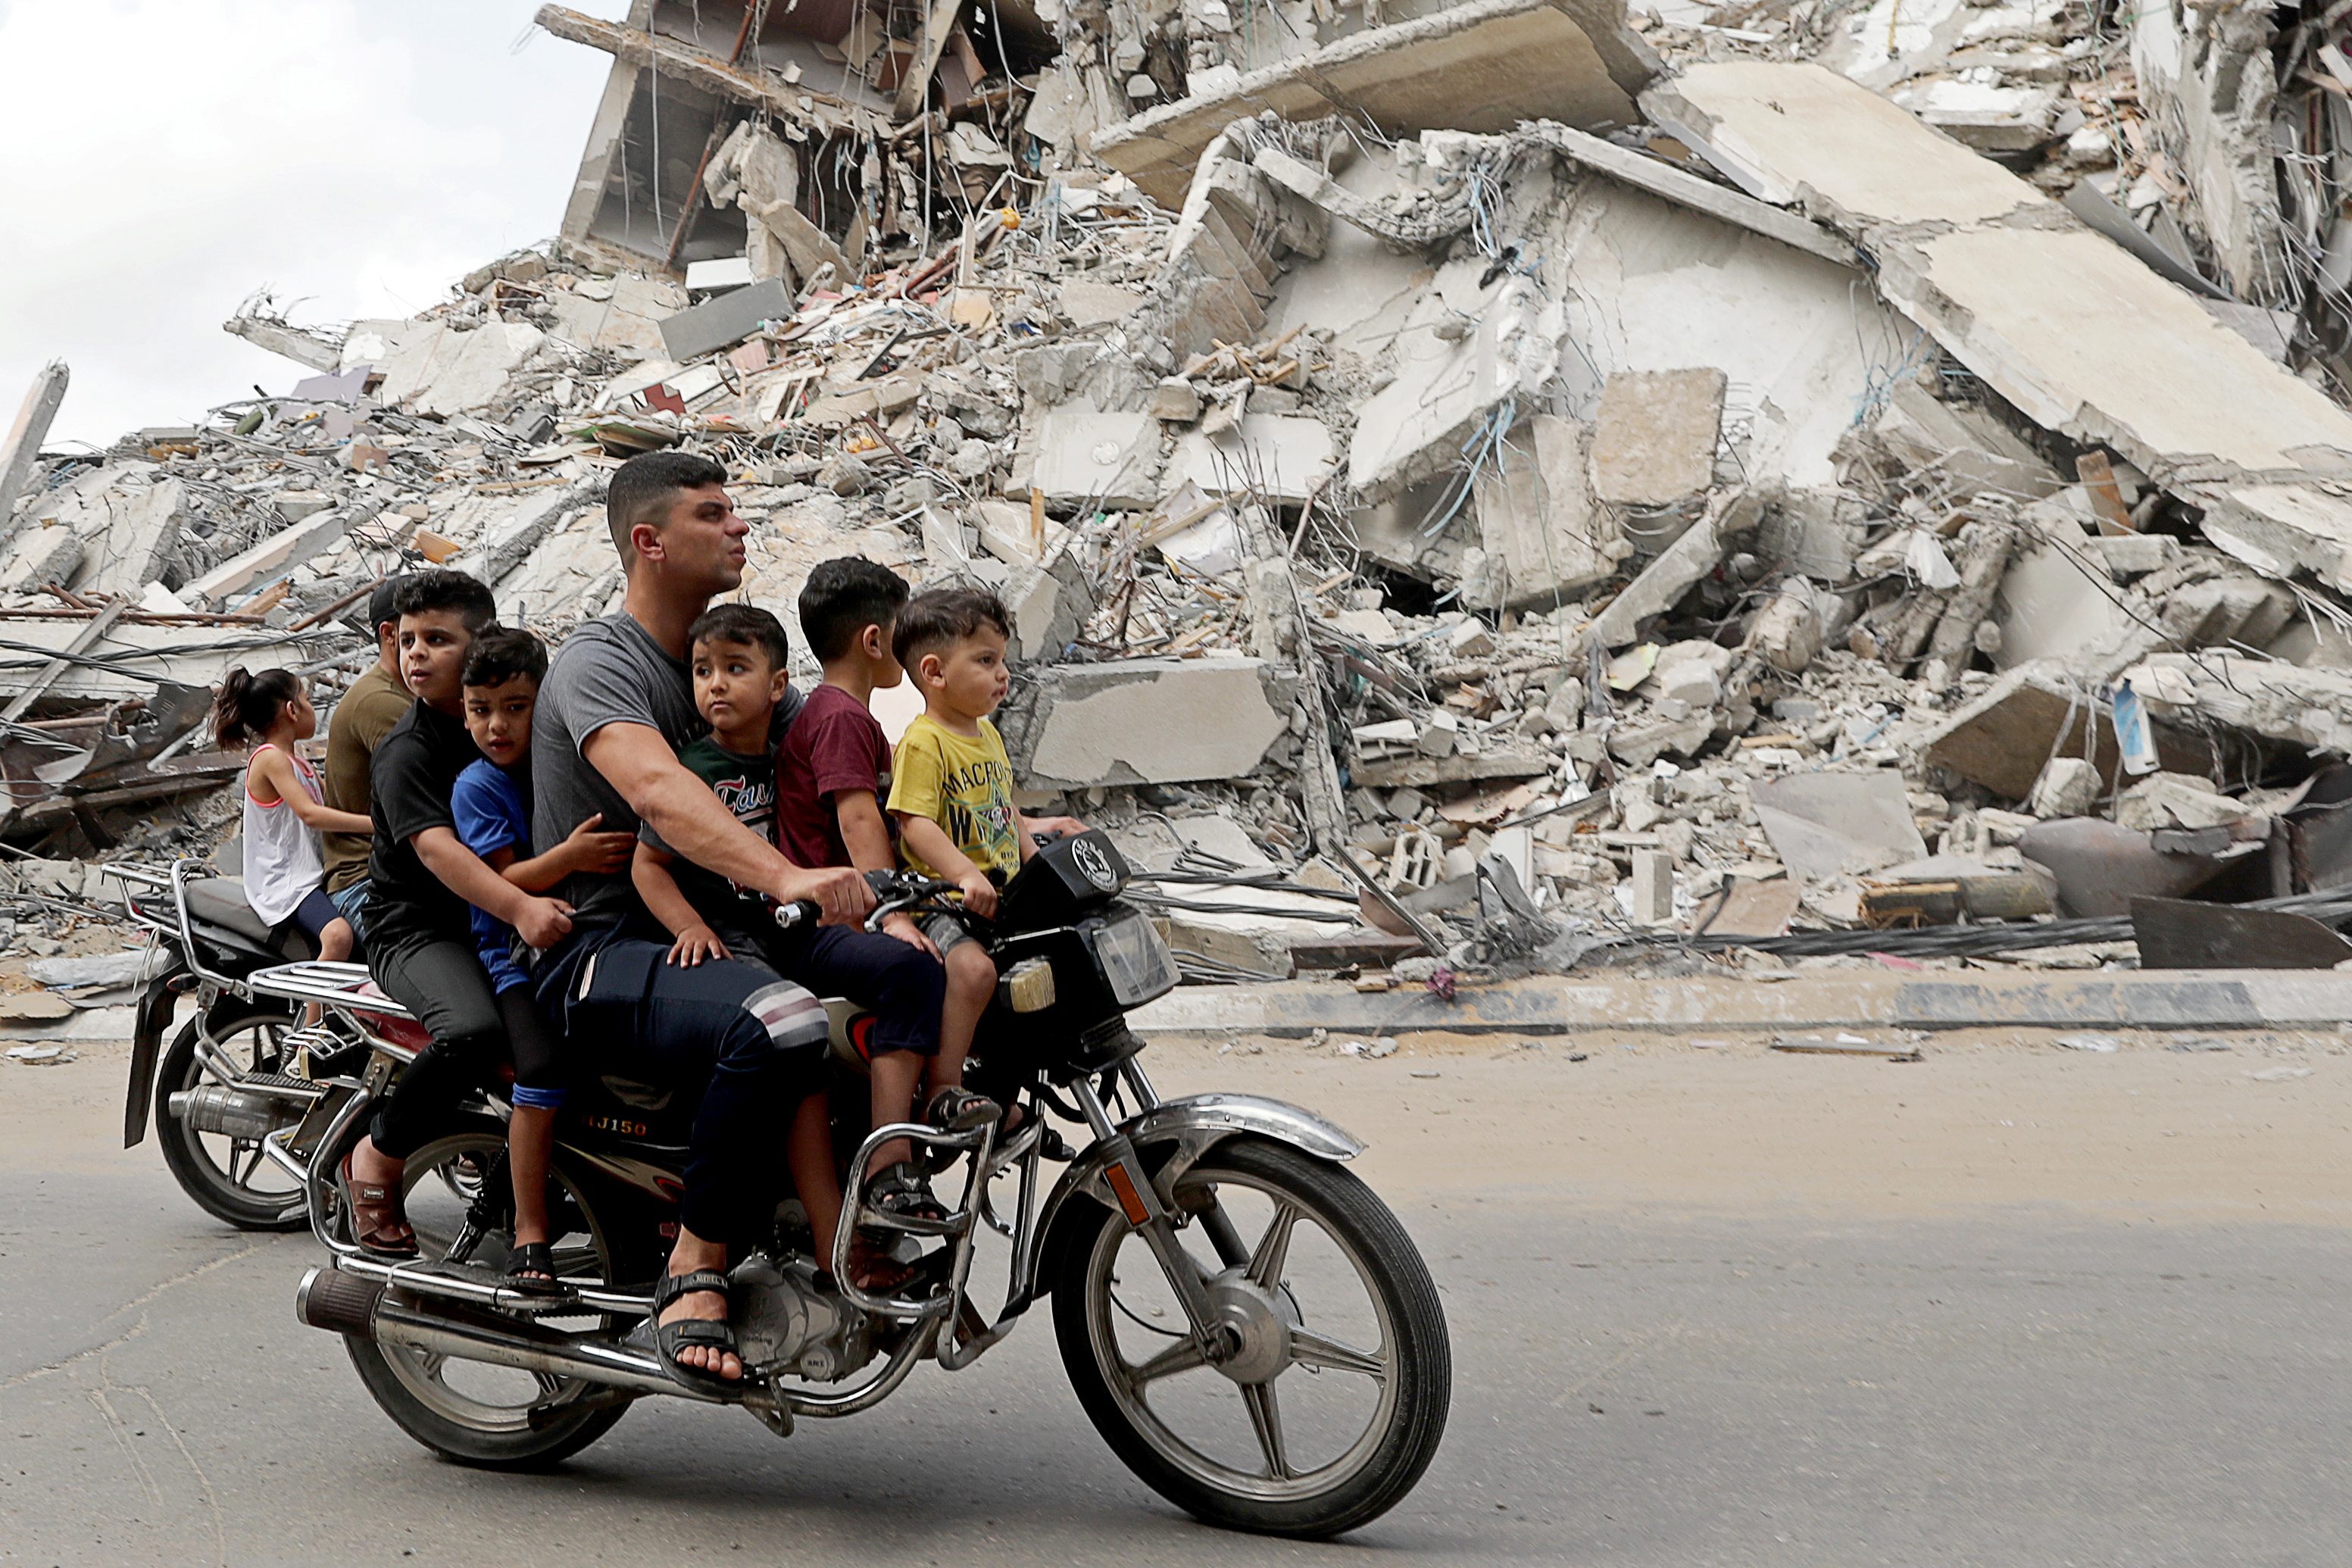 UN rights chief says Israeli strikes on Gaza may be war crimes